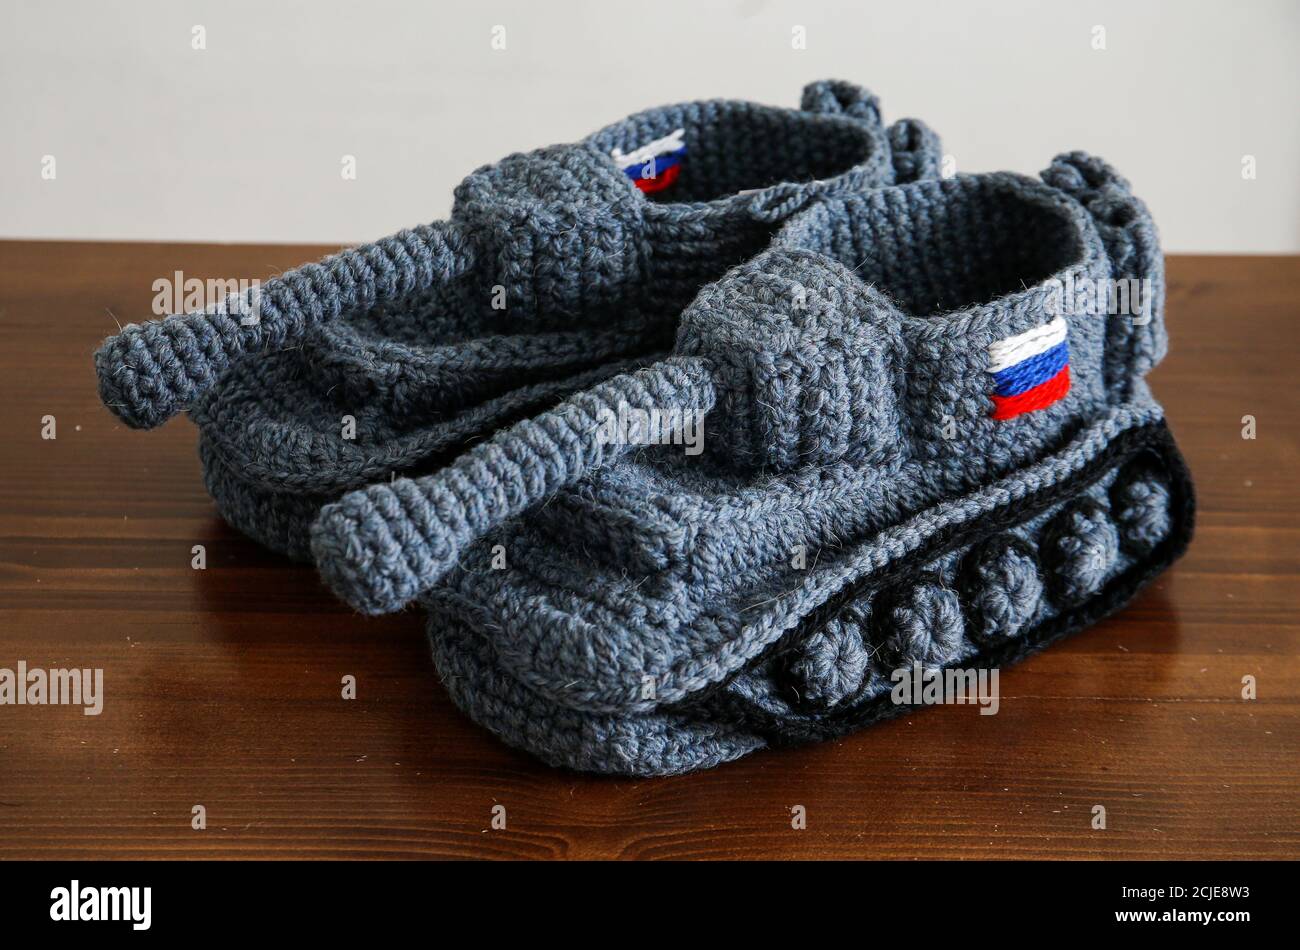 tank slippers